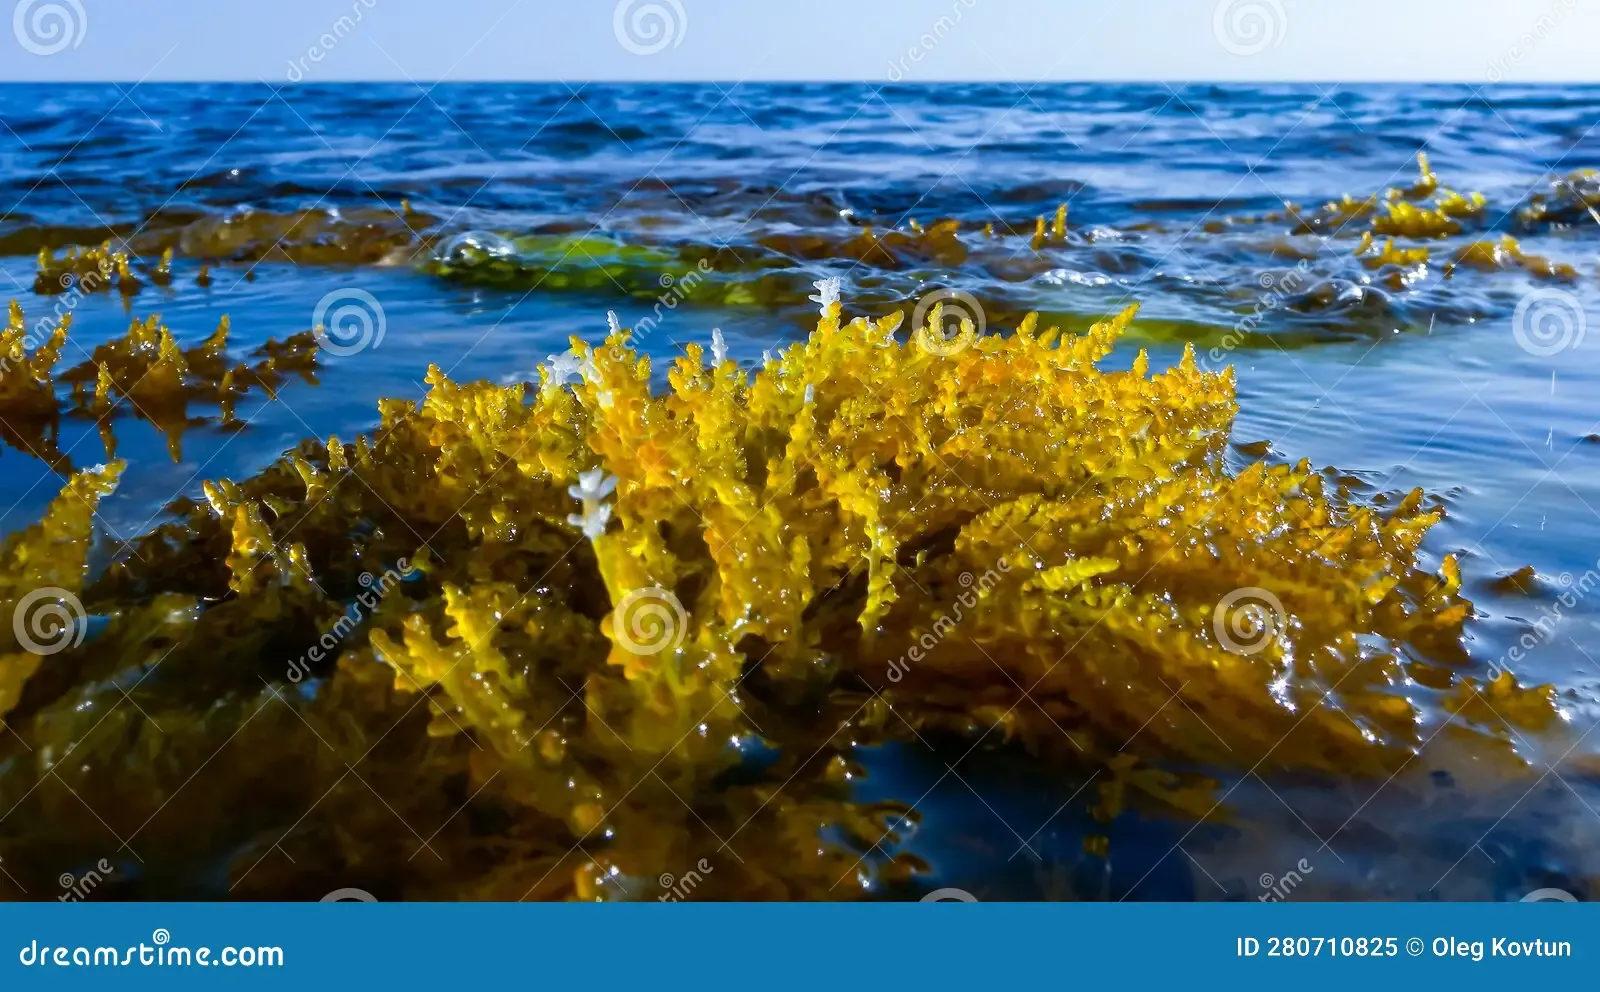 laurencia-papillosa-rhodophyta-algae-stones-water-s-edge-surge-western-crimea-280710825.jpg